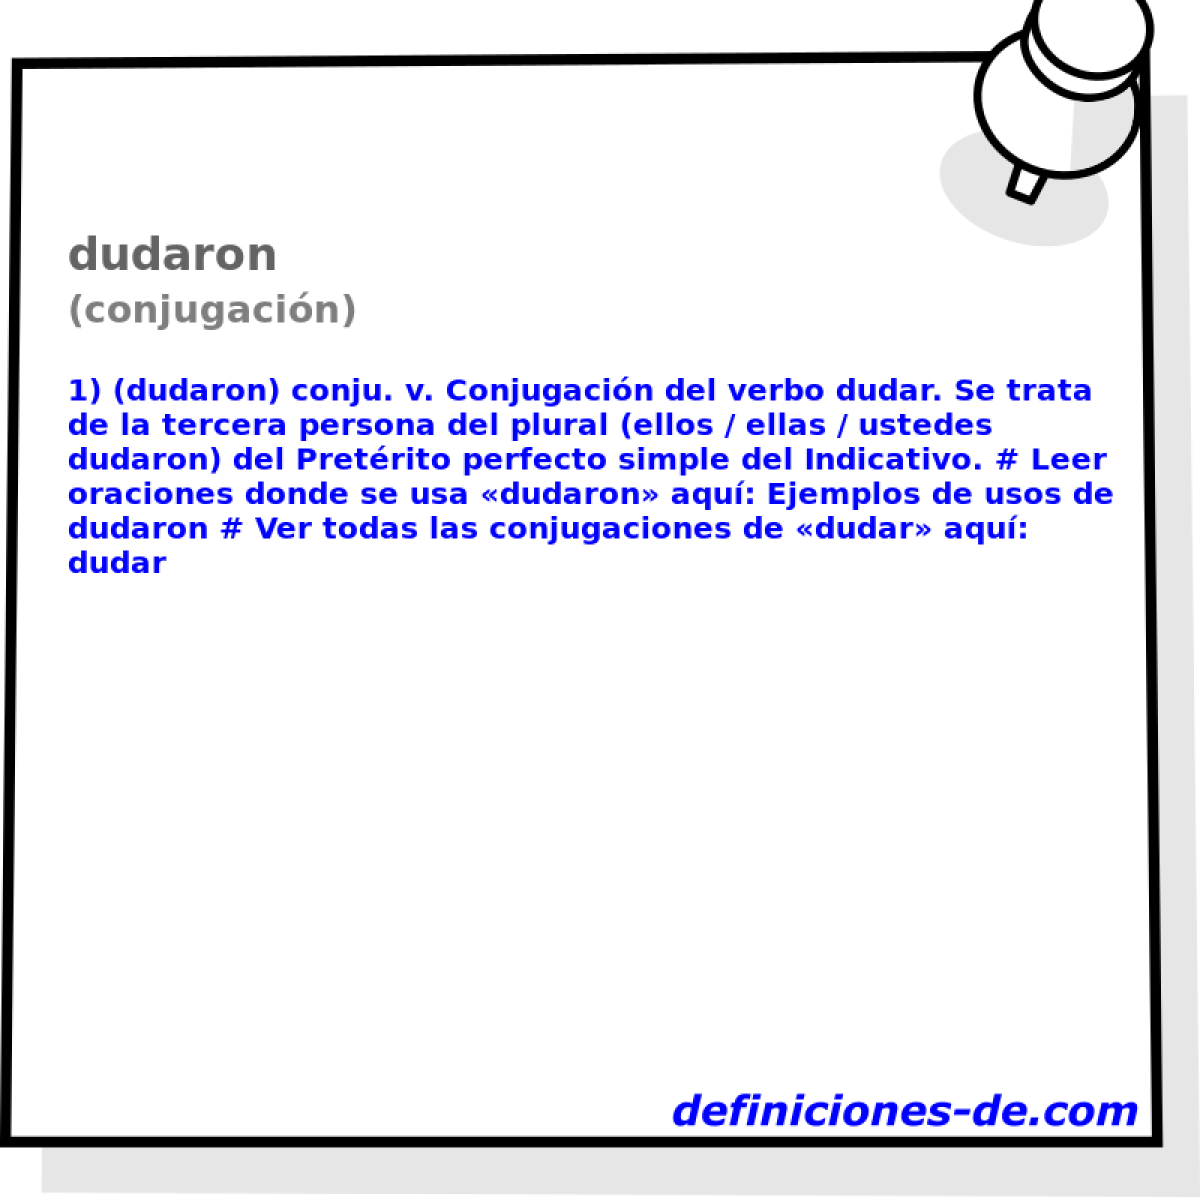 dudaron (conjugacin)